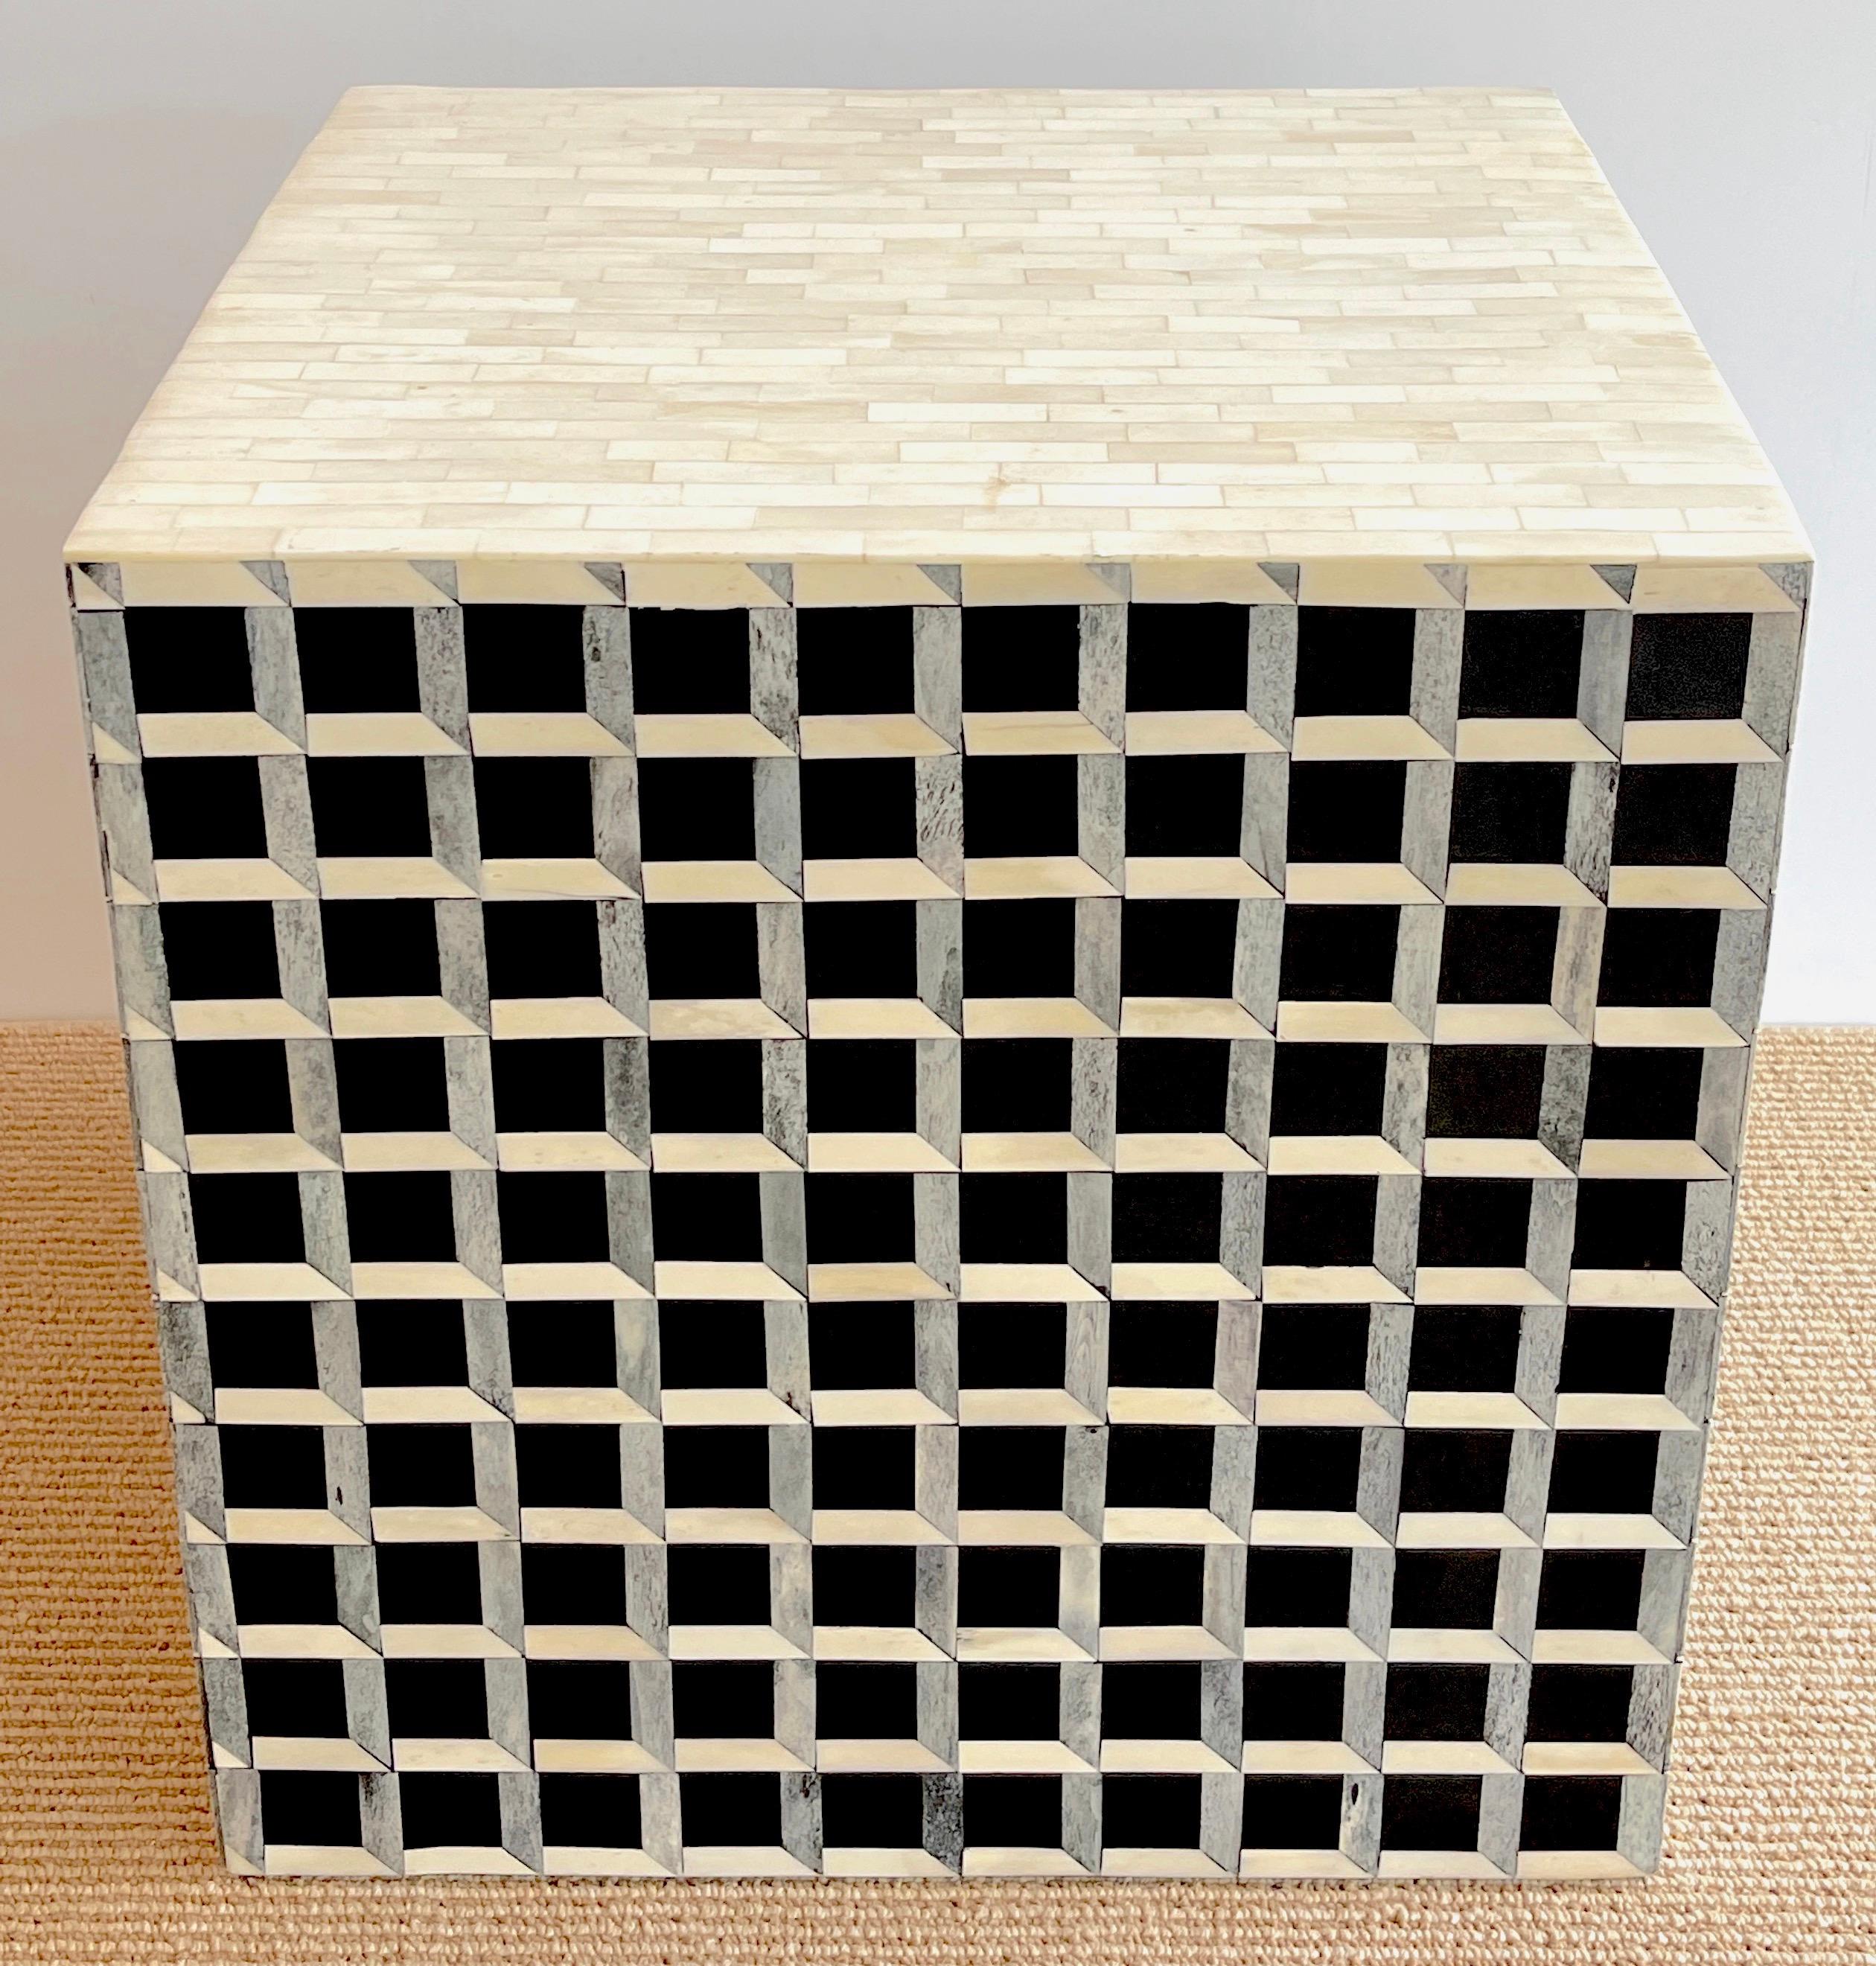 Modern Inlaid Bone & Ebony Op art geometric cube table
Exceptional 18